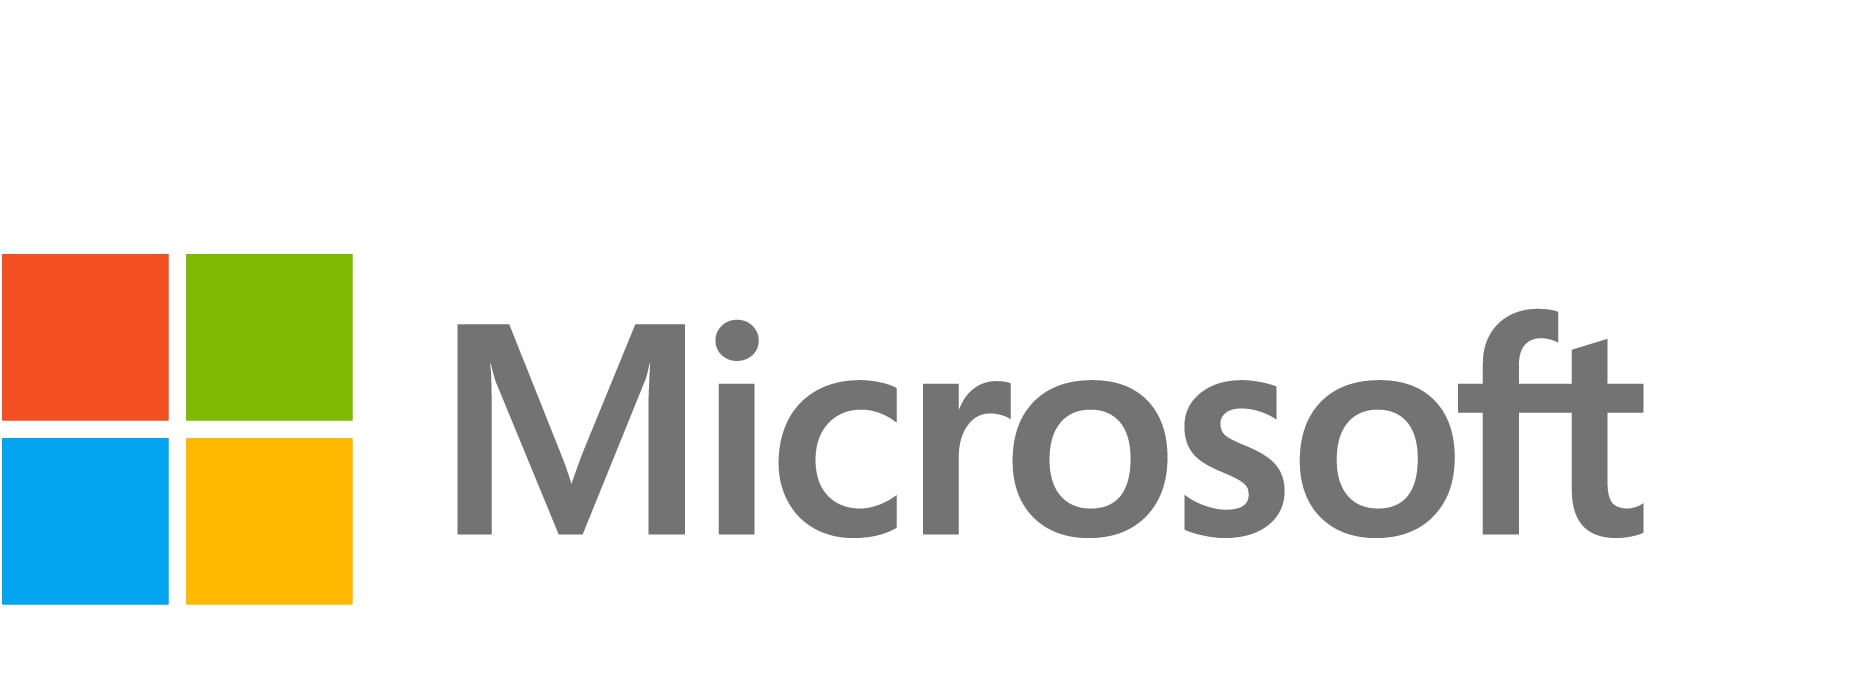 Microsoft Excel - license - 1 device